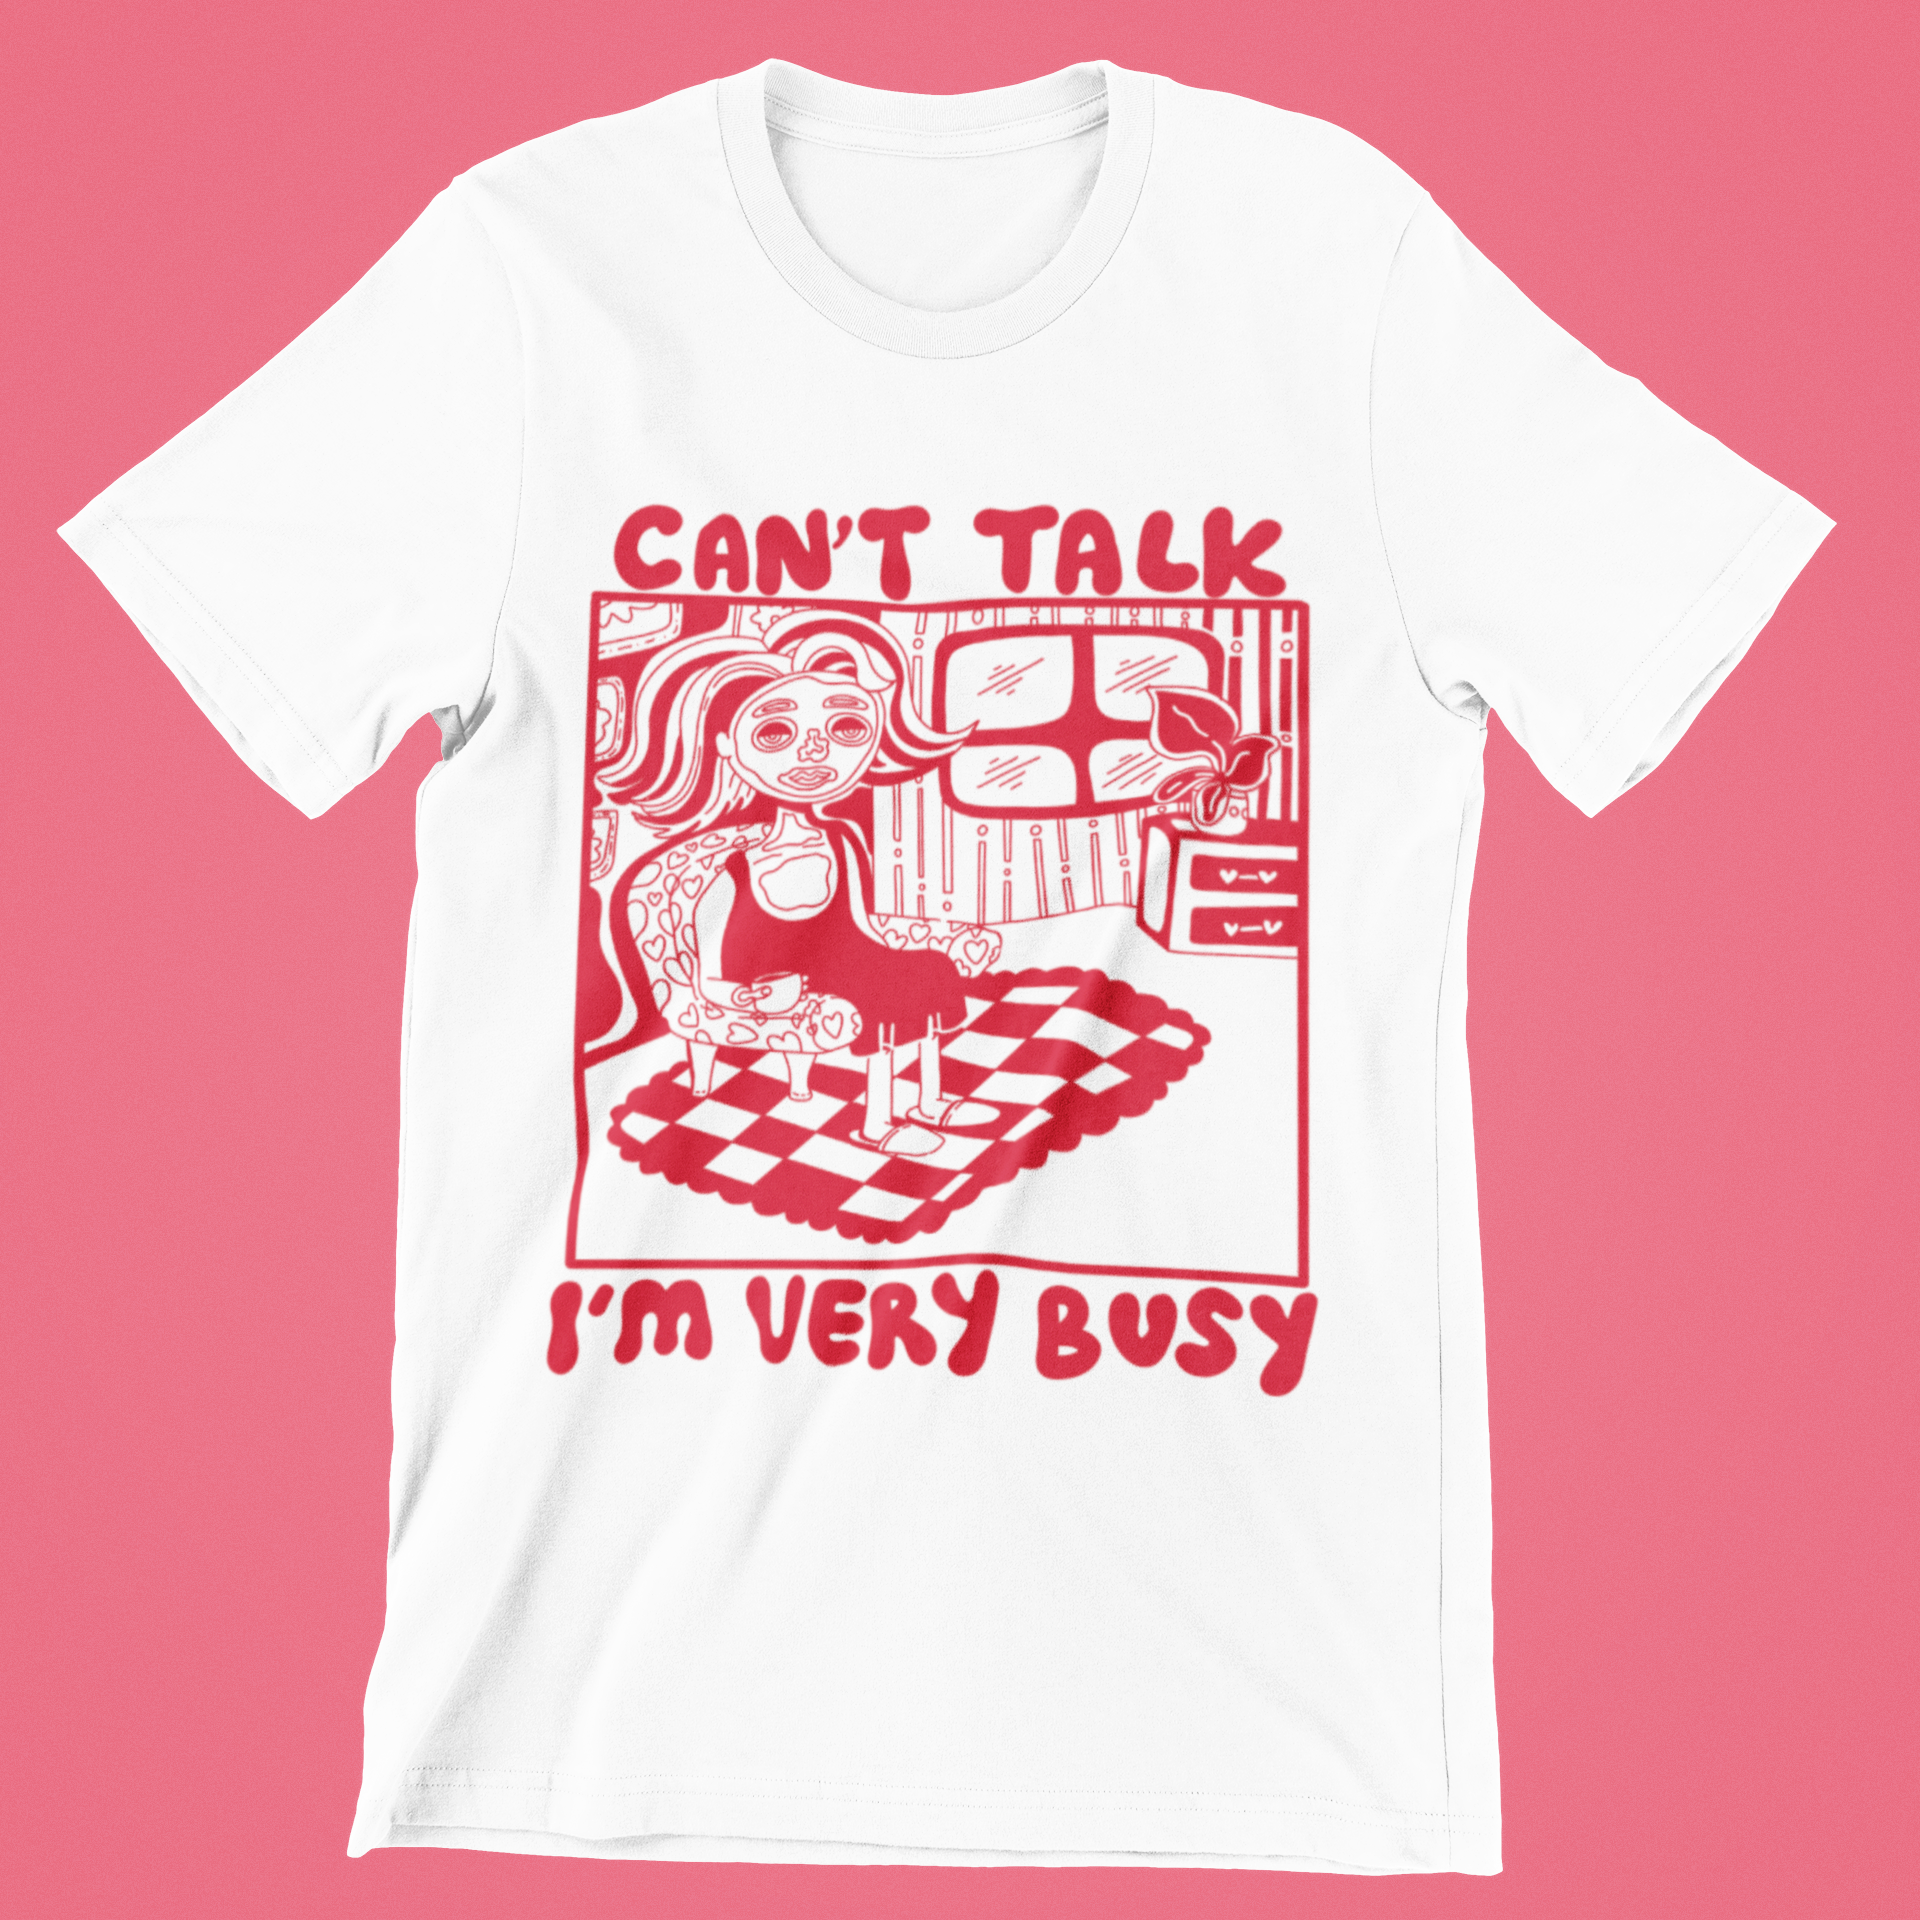 can't talk, I'm busy - red silkscreen white t-shirt